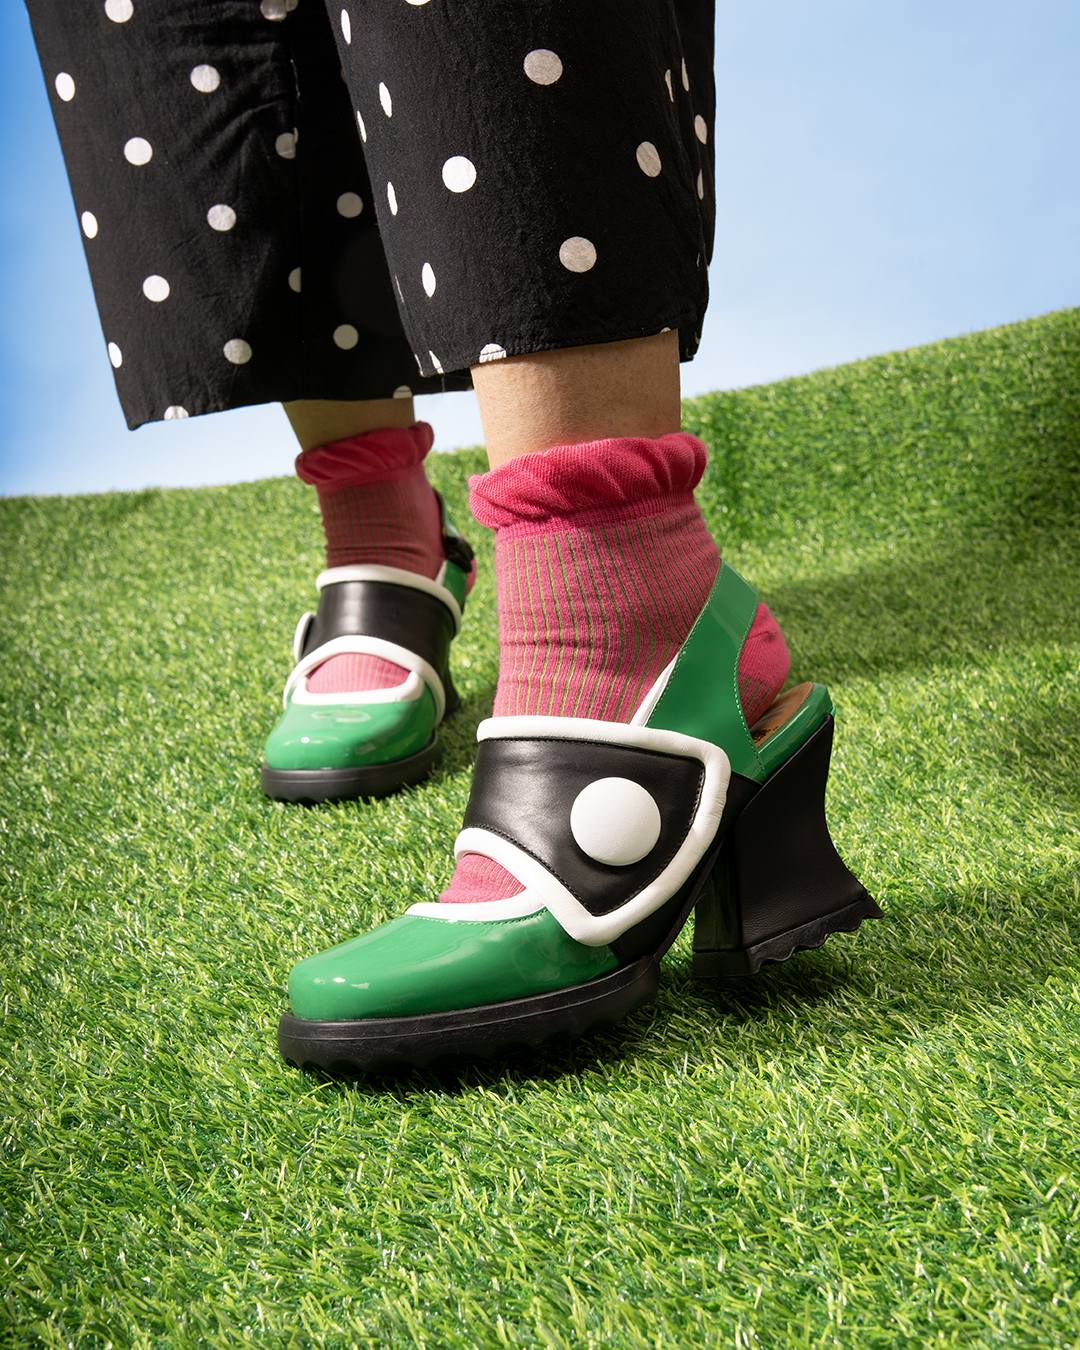 John Fluevog Shoes on X: The grass is always greener w/ new